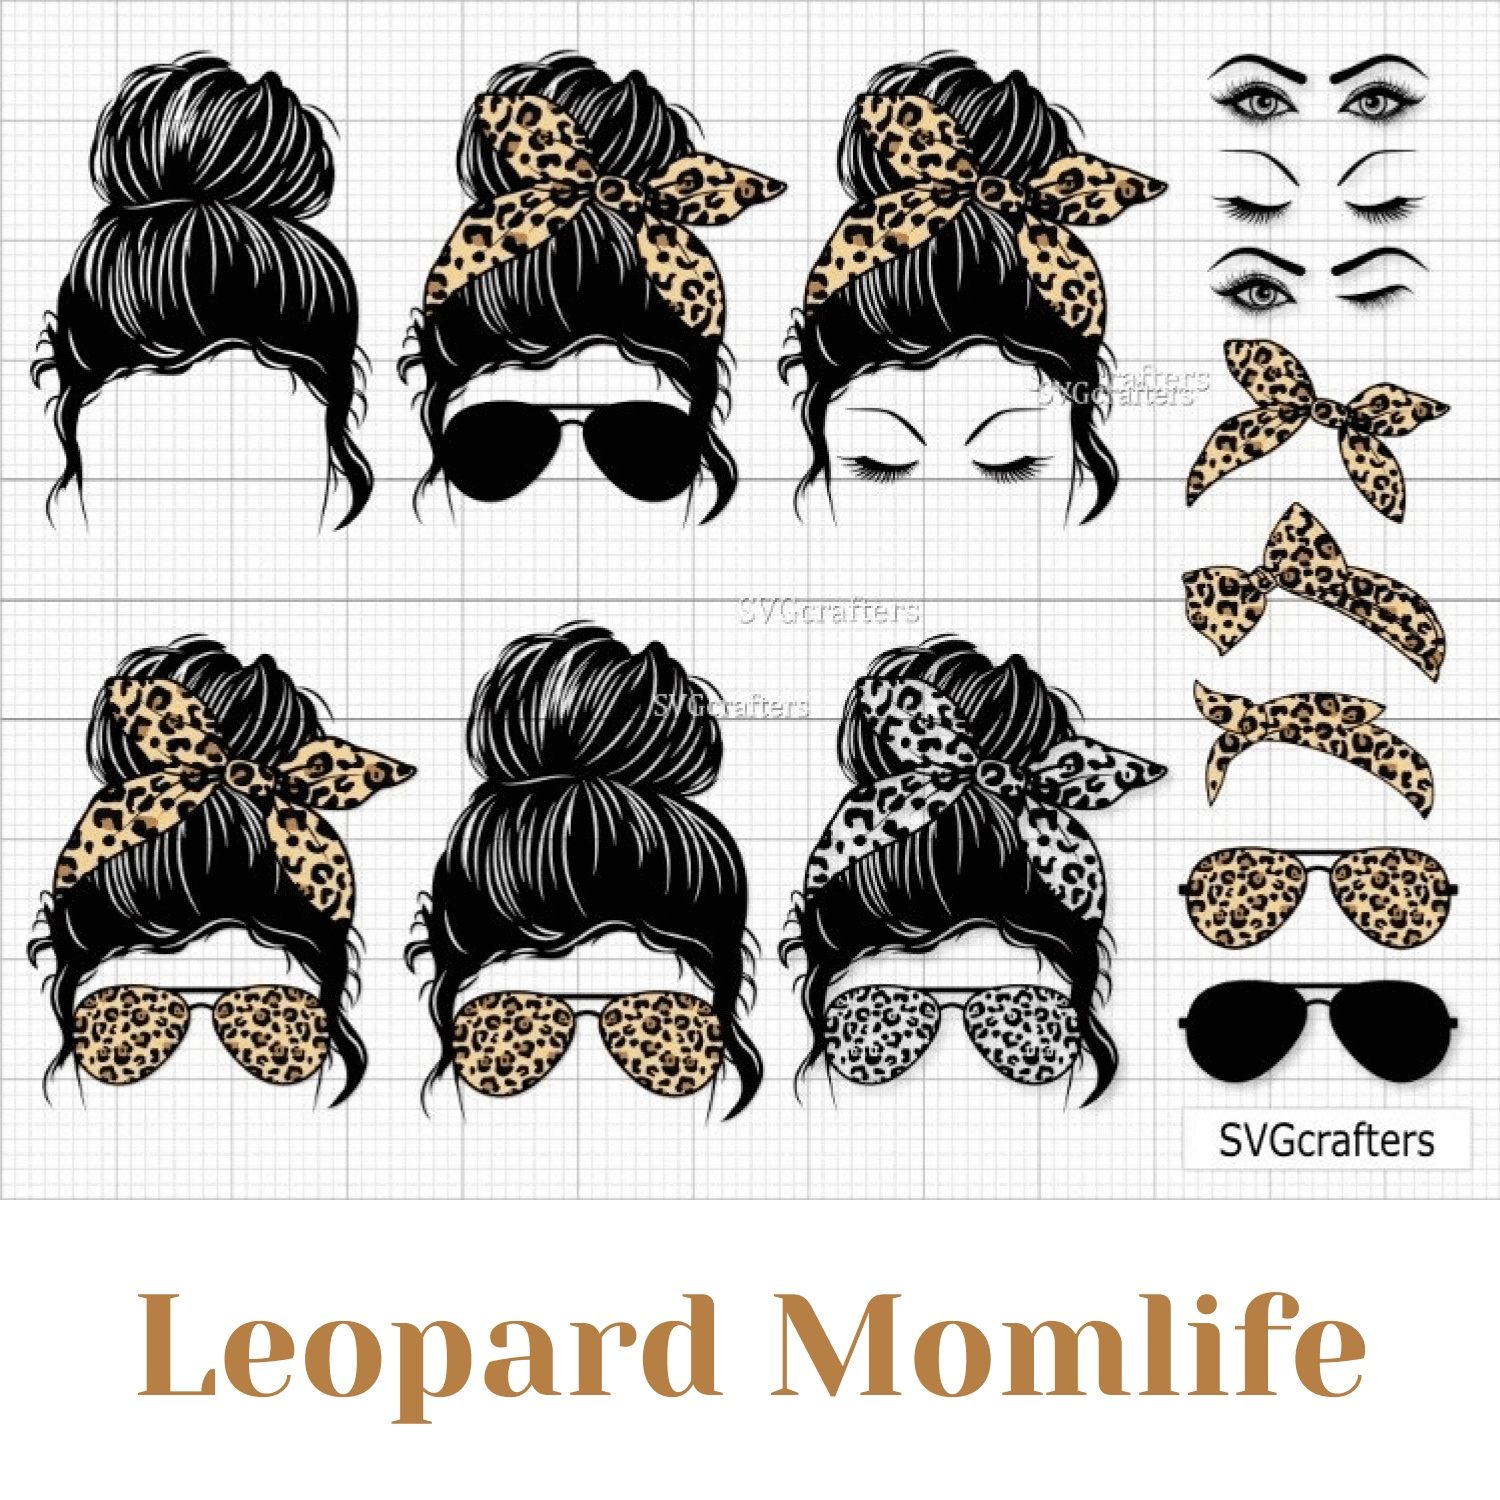 Leopard Momlife SVGcrafted.